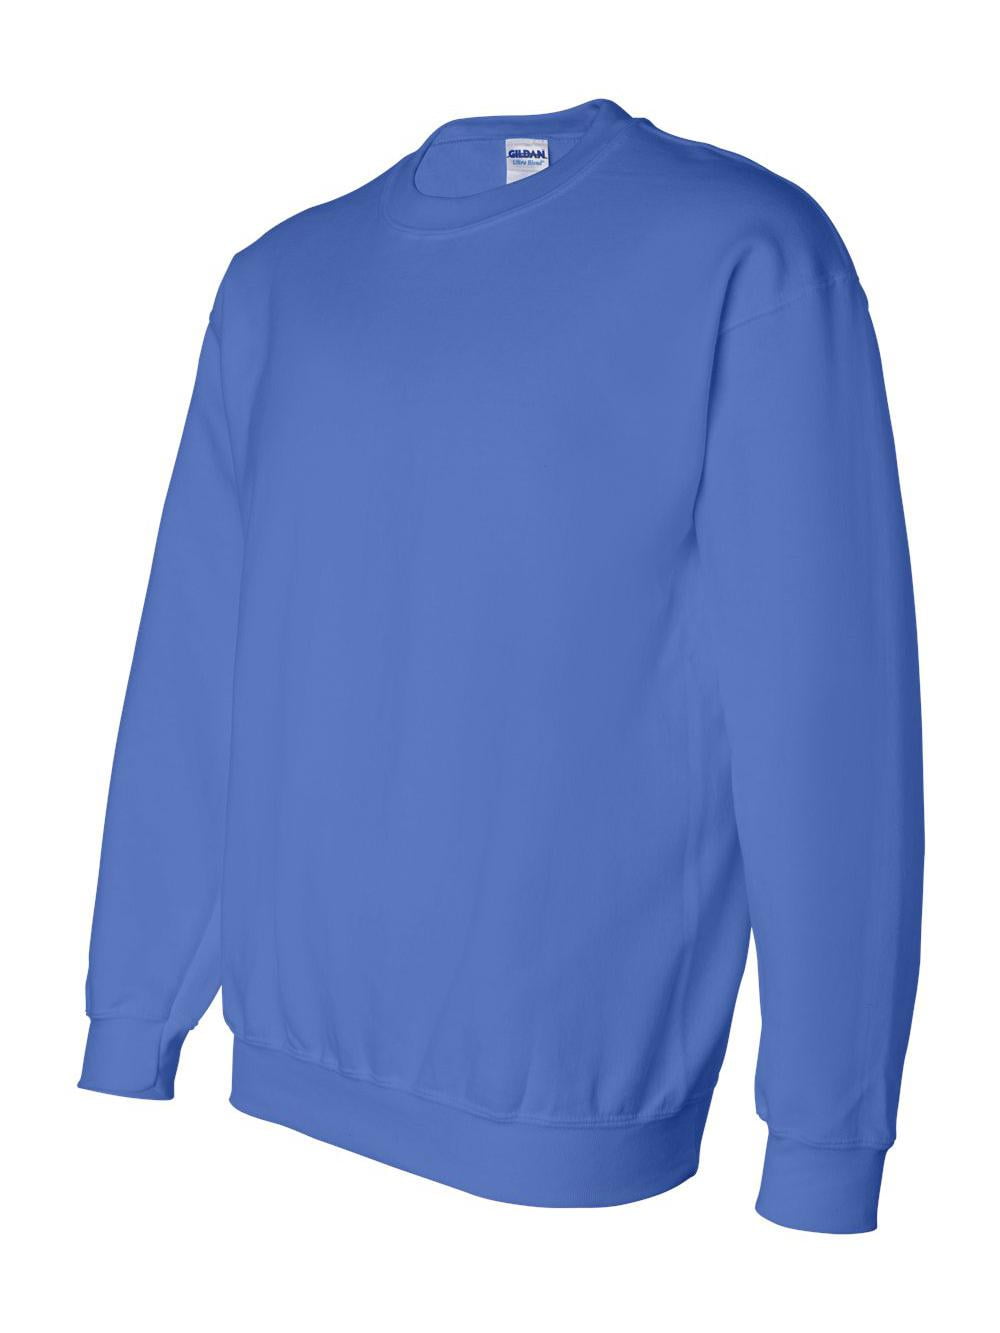 Gildan - Gildan - DryBlend Crewneck Sweatshirt - 12000 - Walmart.com ...